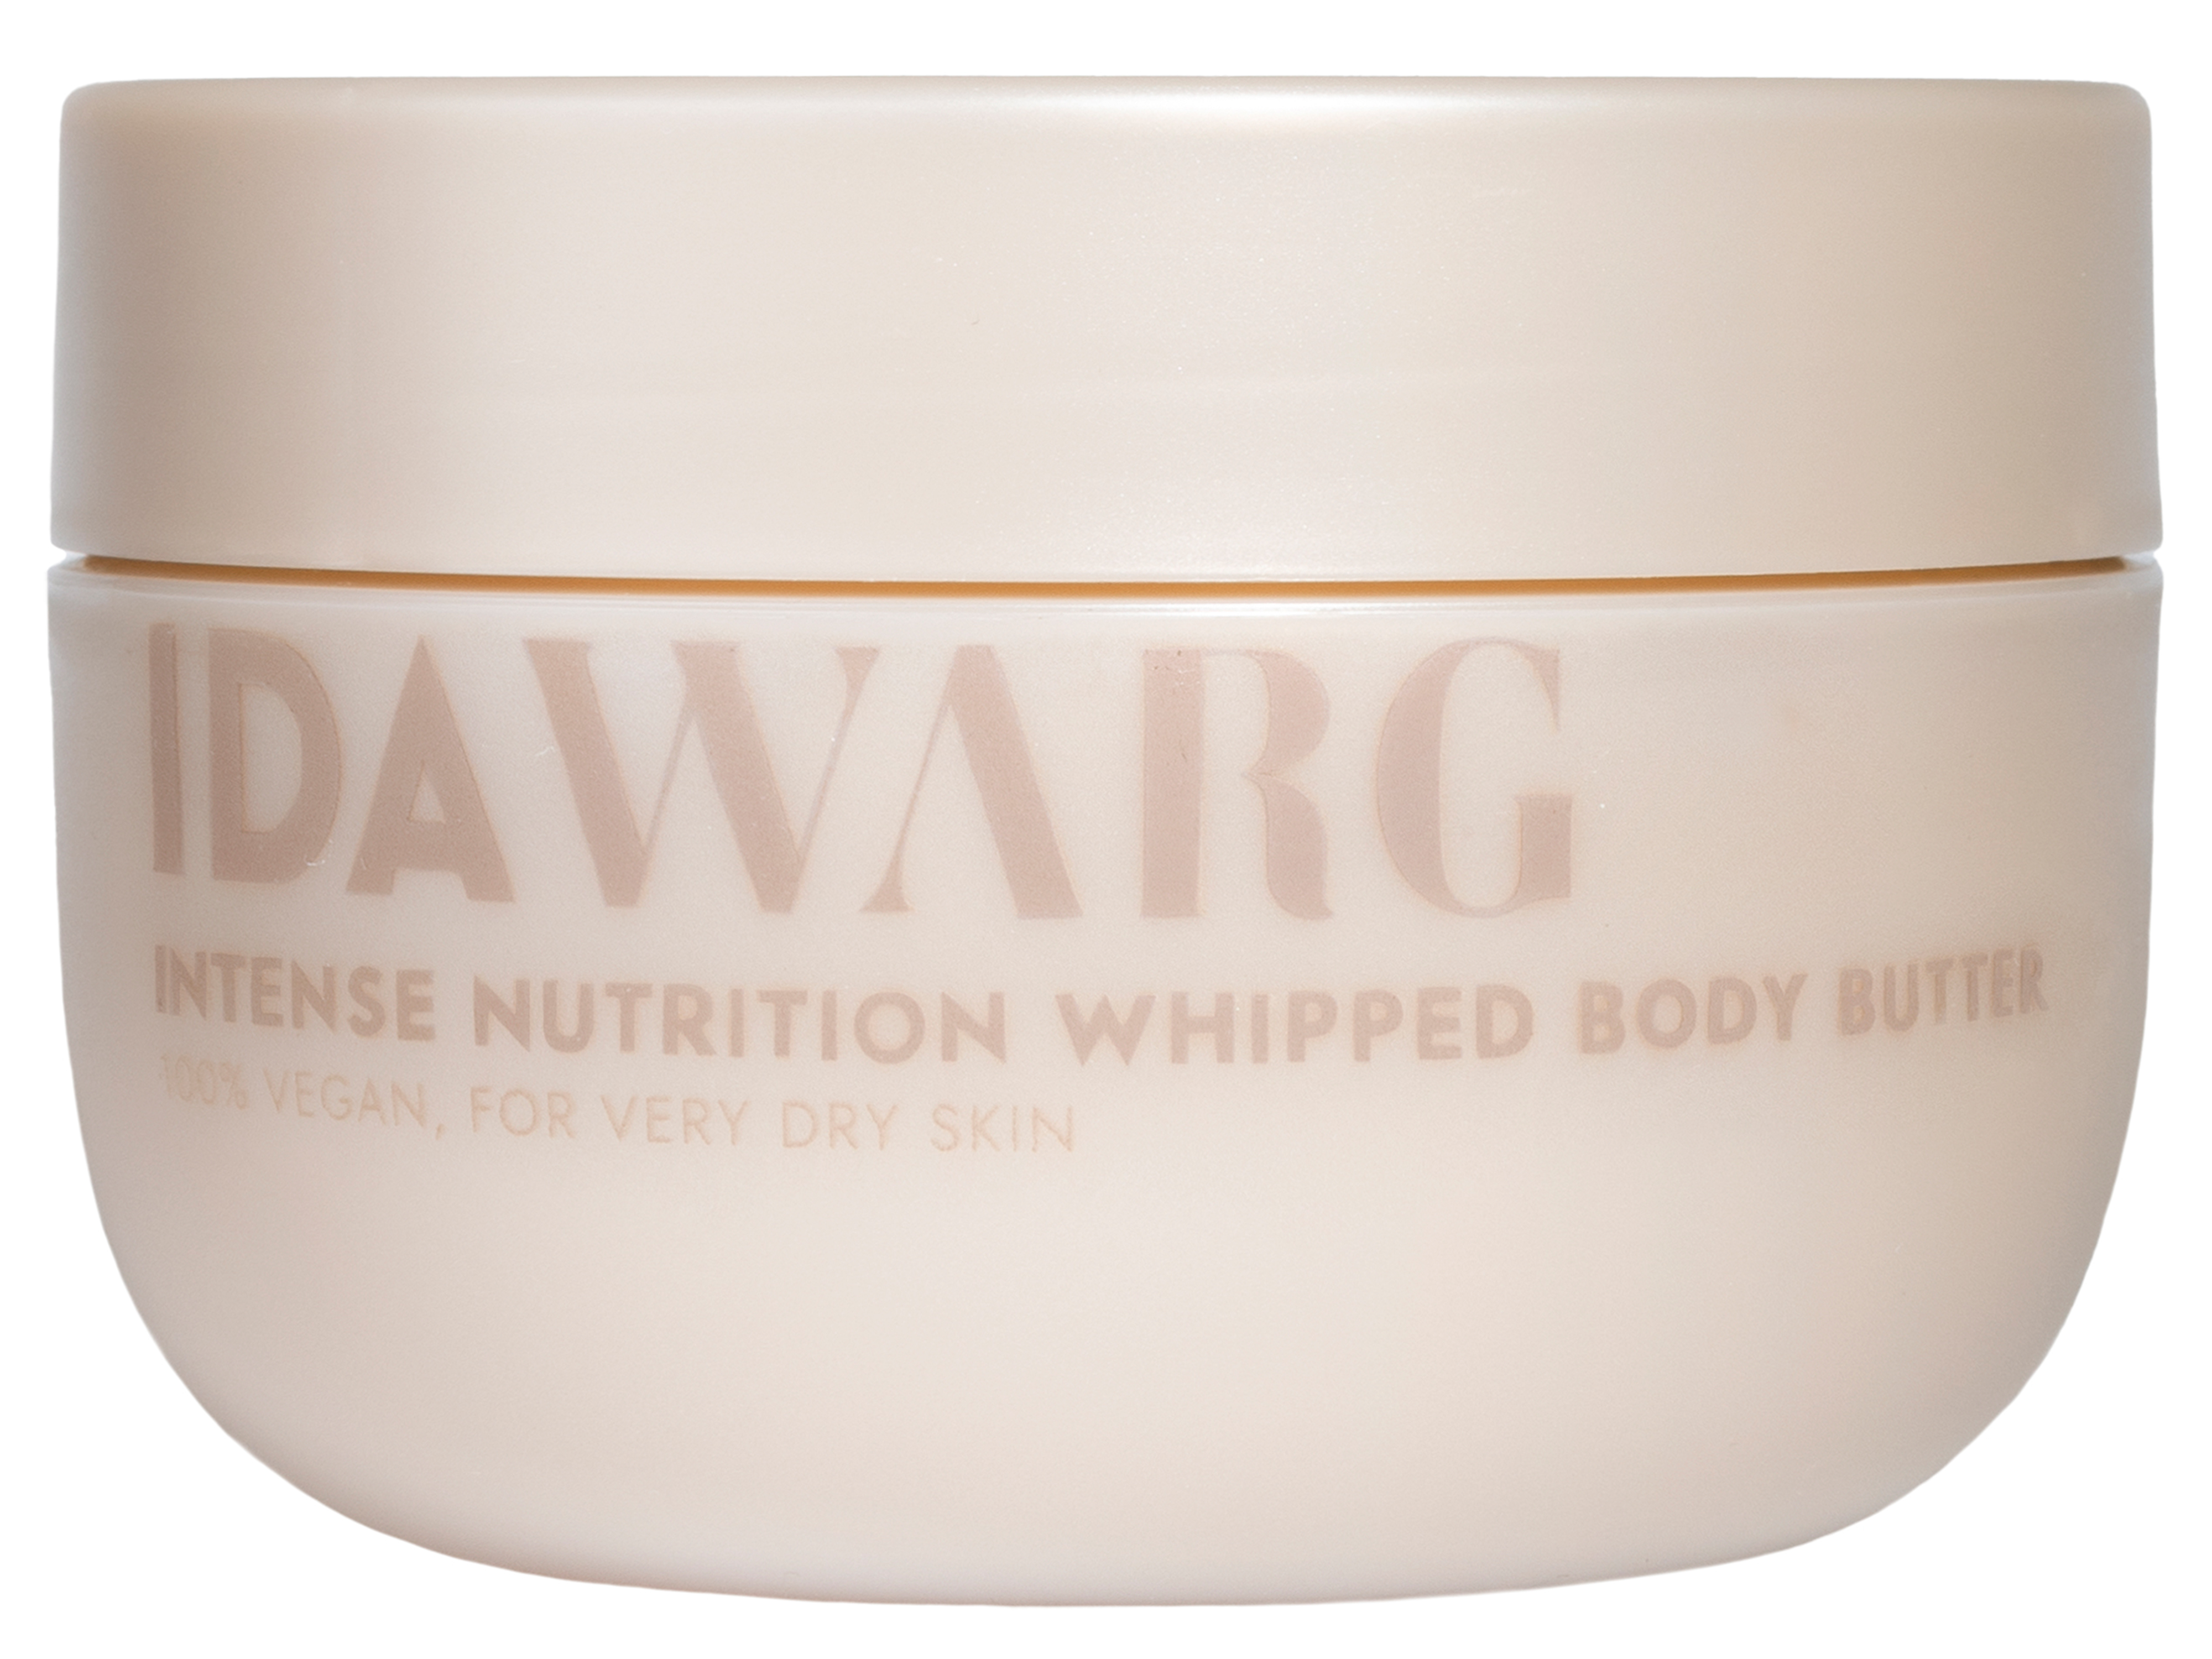 Ida Warg Beauty Intense Nutrition Whipped Body Butter, 250 ml